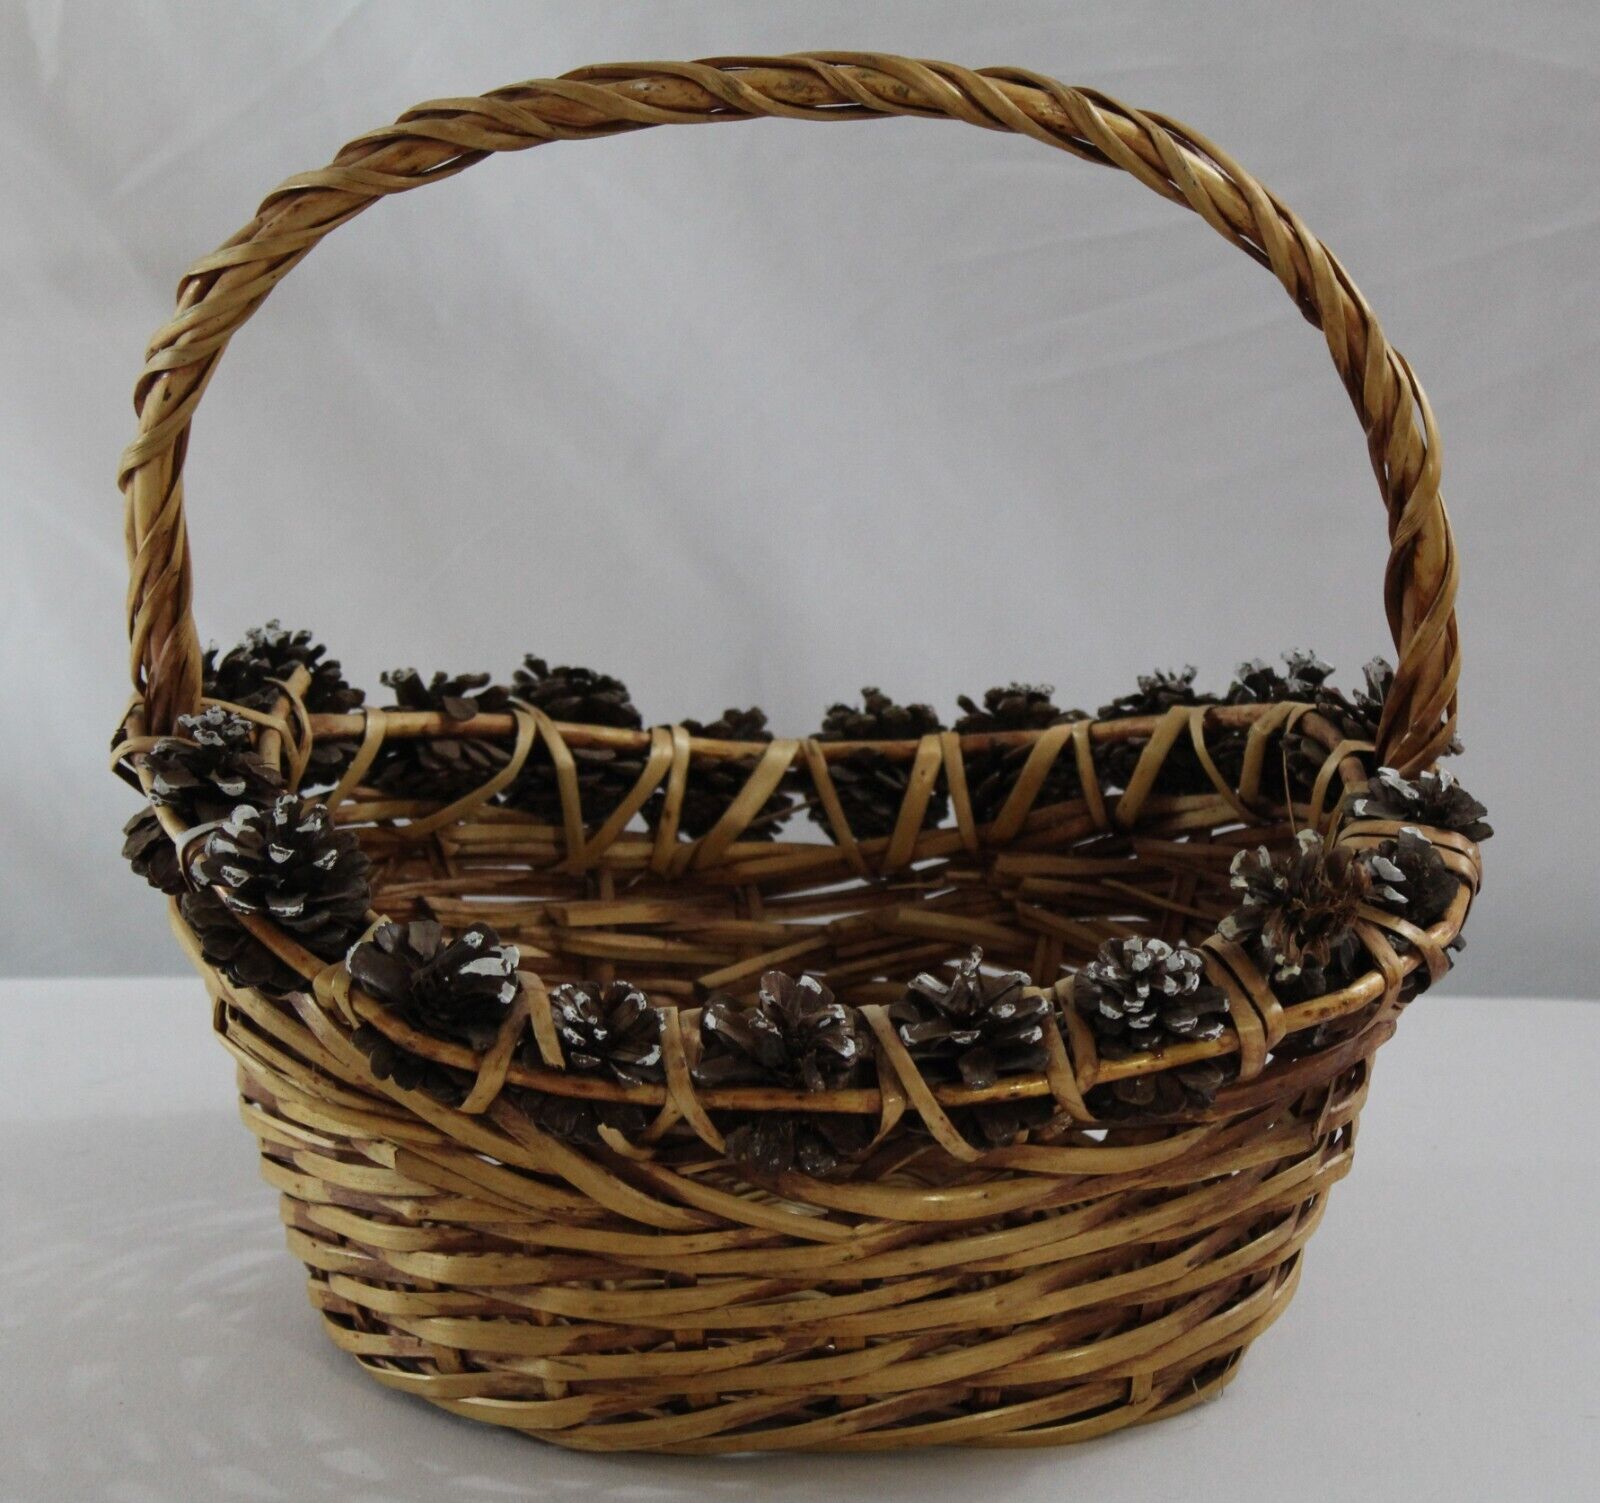 Vintage Woven Wicker Forest Basket Pinecone Edging Single Handle Medium